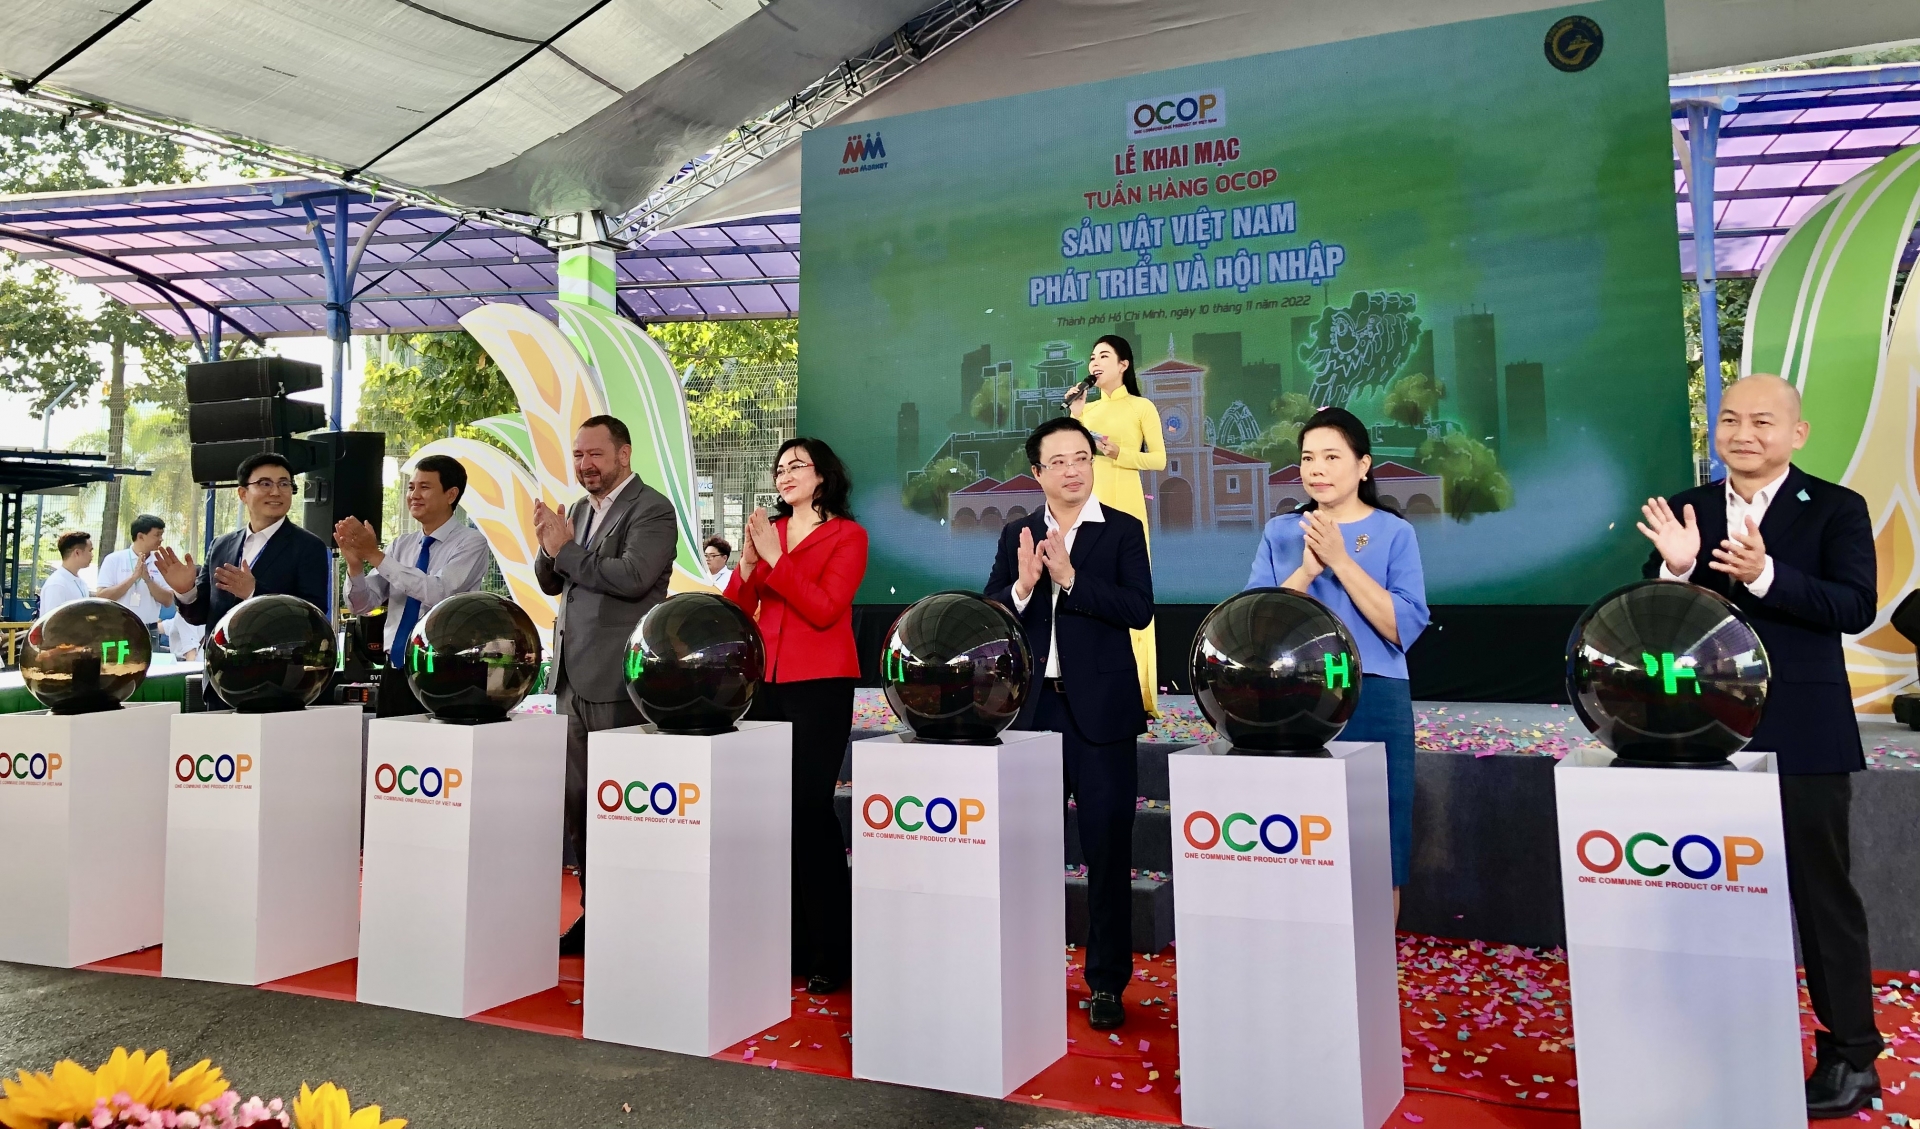 OCOP Fair launched in Hanoi, Da Nang and Ho Chi Minh City